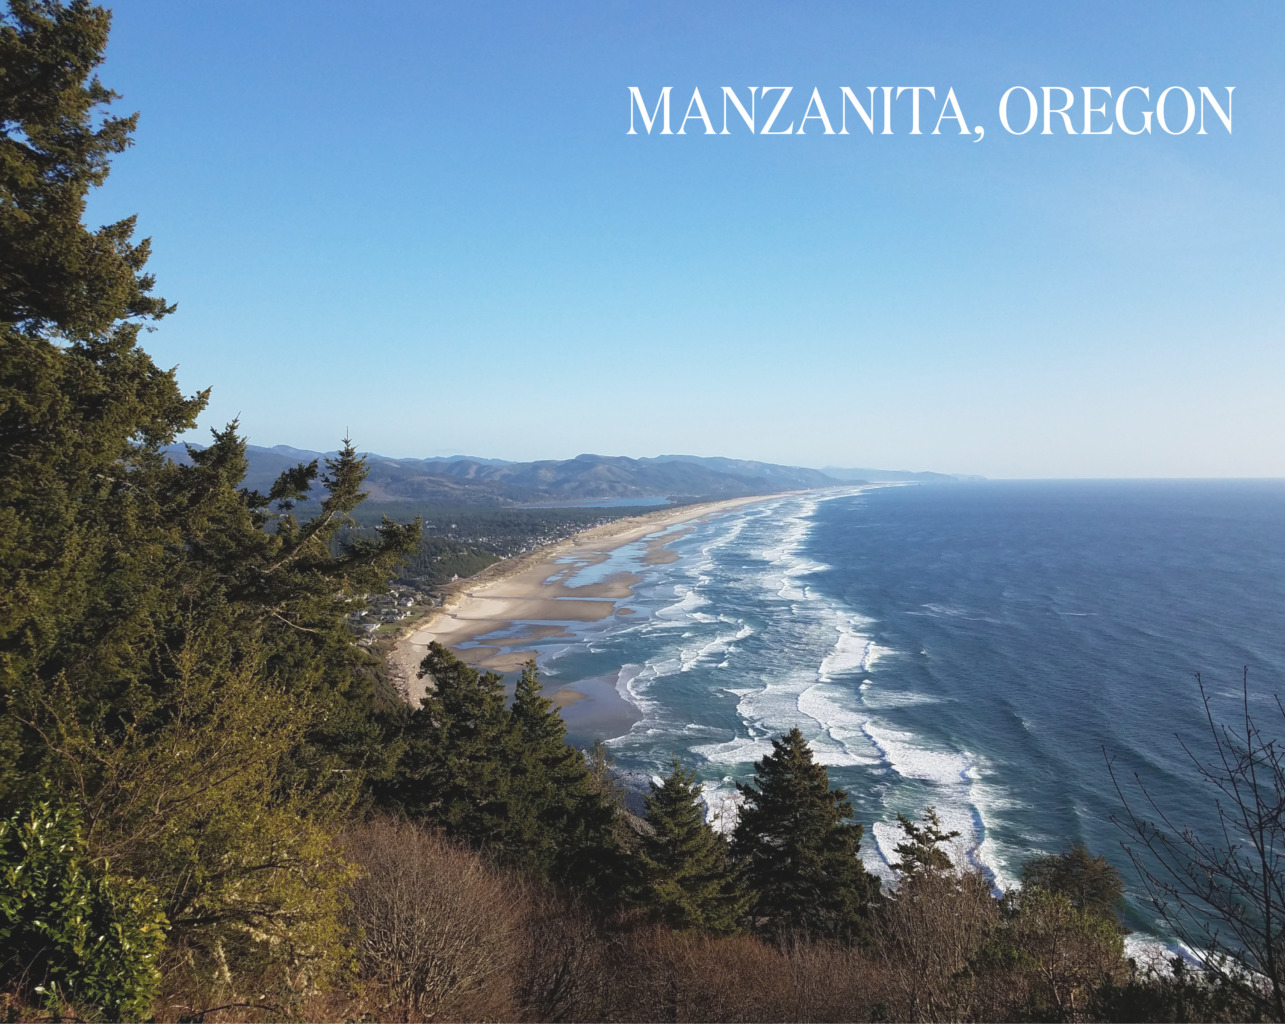 Manzanita, Oregon